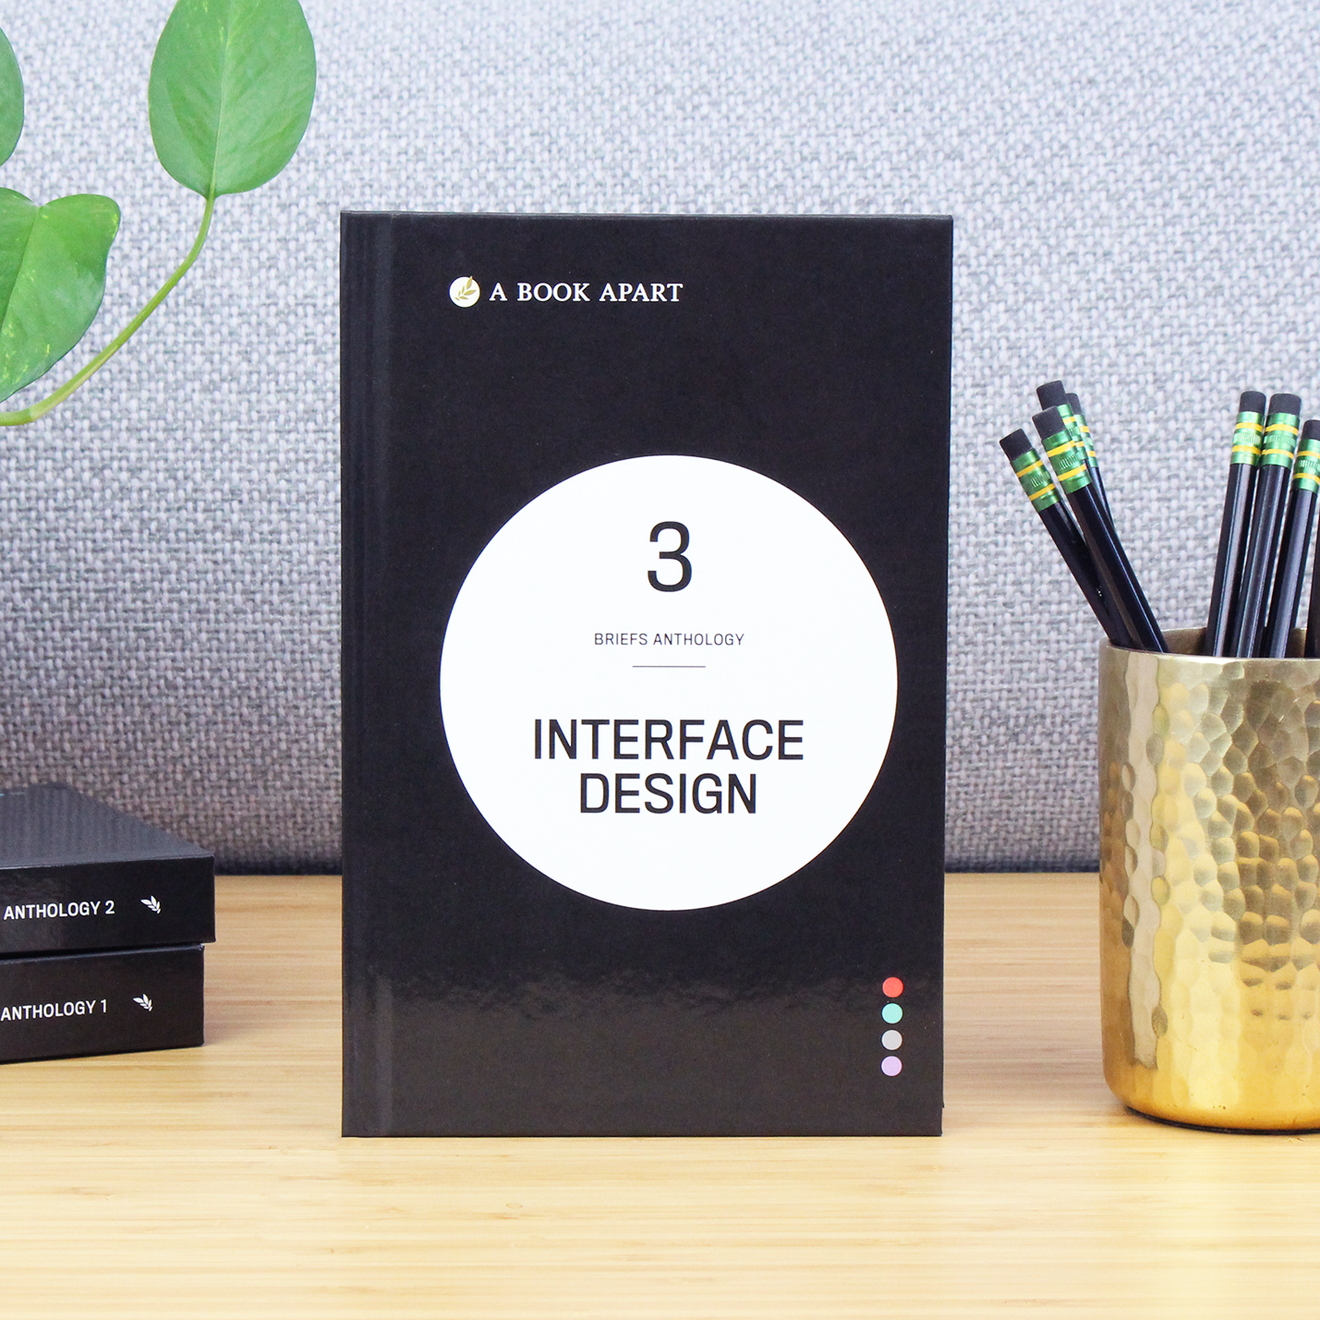 Briefs Anthology 3: Interface Design